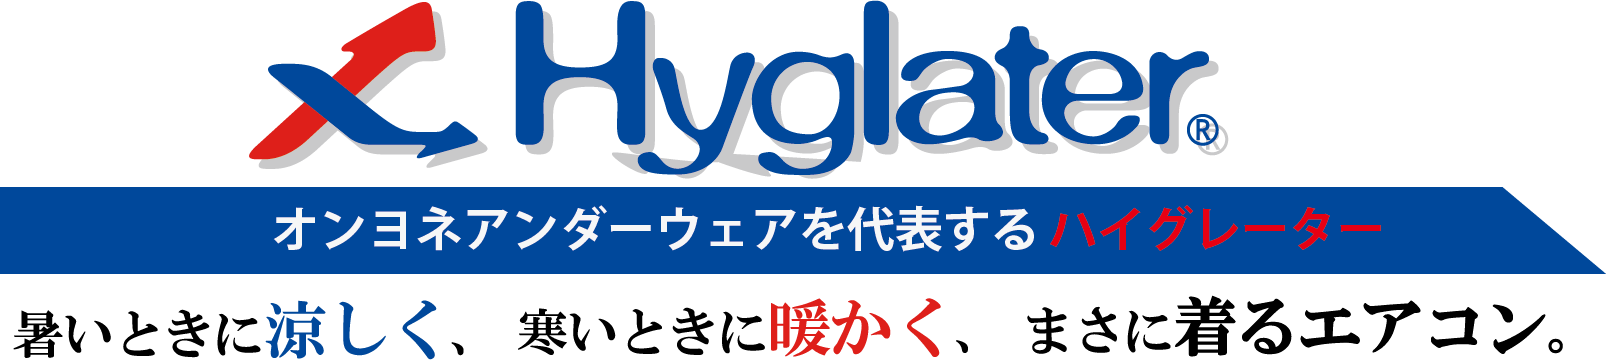 Hyglater。オンヨネアンダーウェアを代表するハイグレーター。